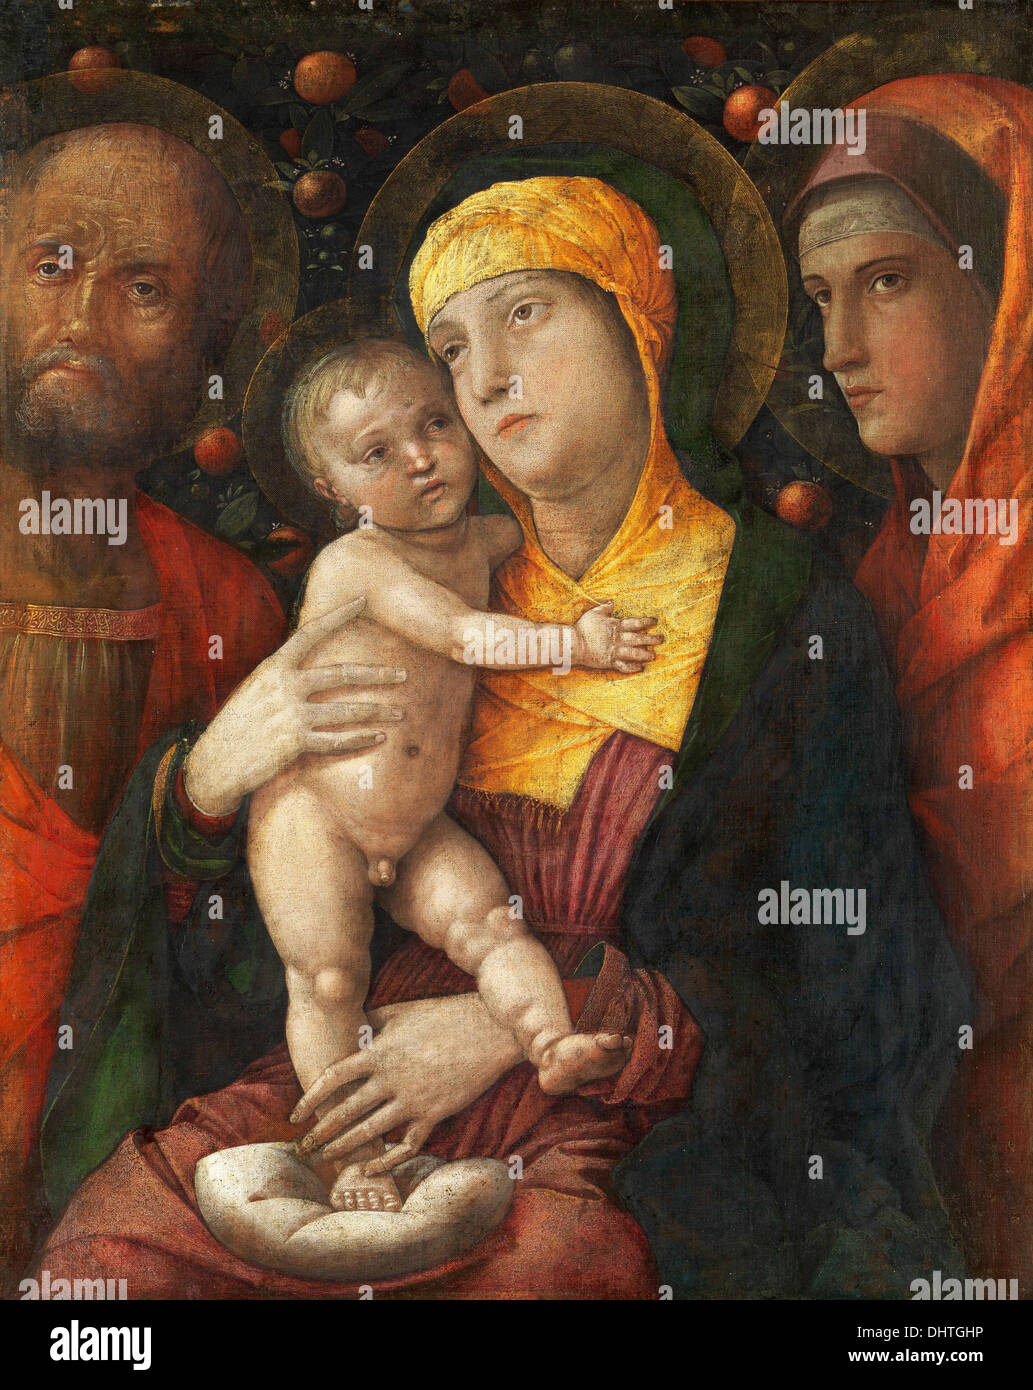 The Holy Family with Saint Mary Magdalen - by Andrea Mantegna, 1500 Stock Photo